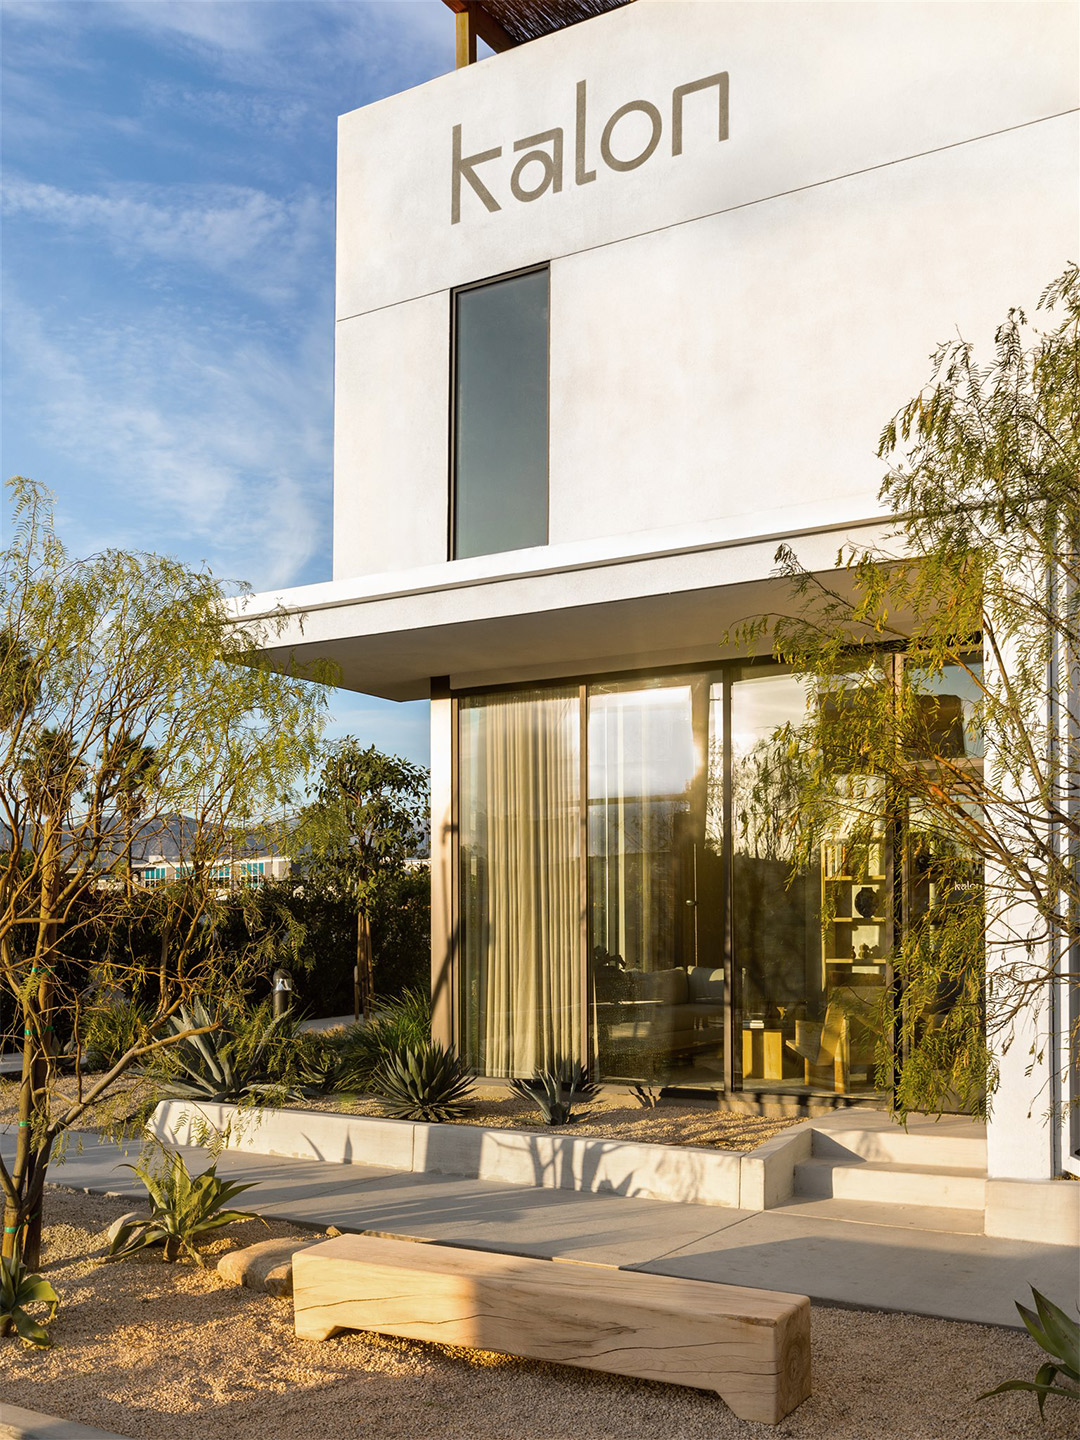 Kalon Studios opens a showroom in Los Angeles.